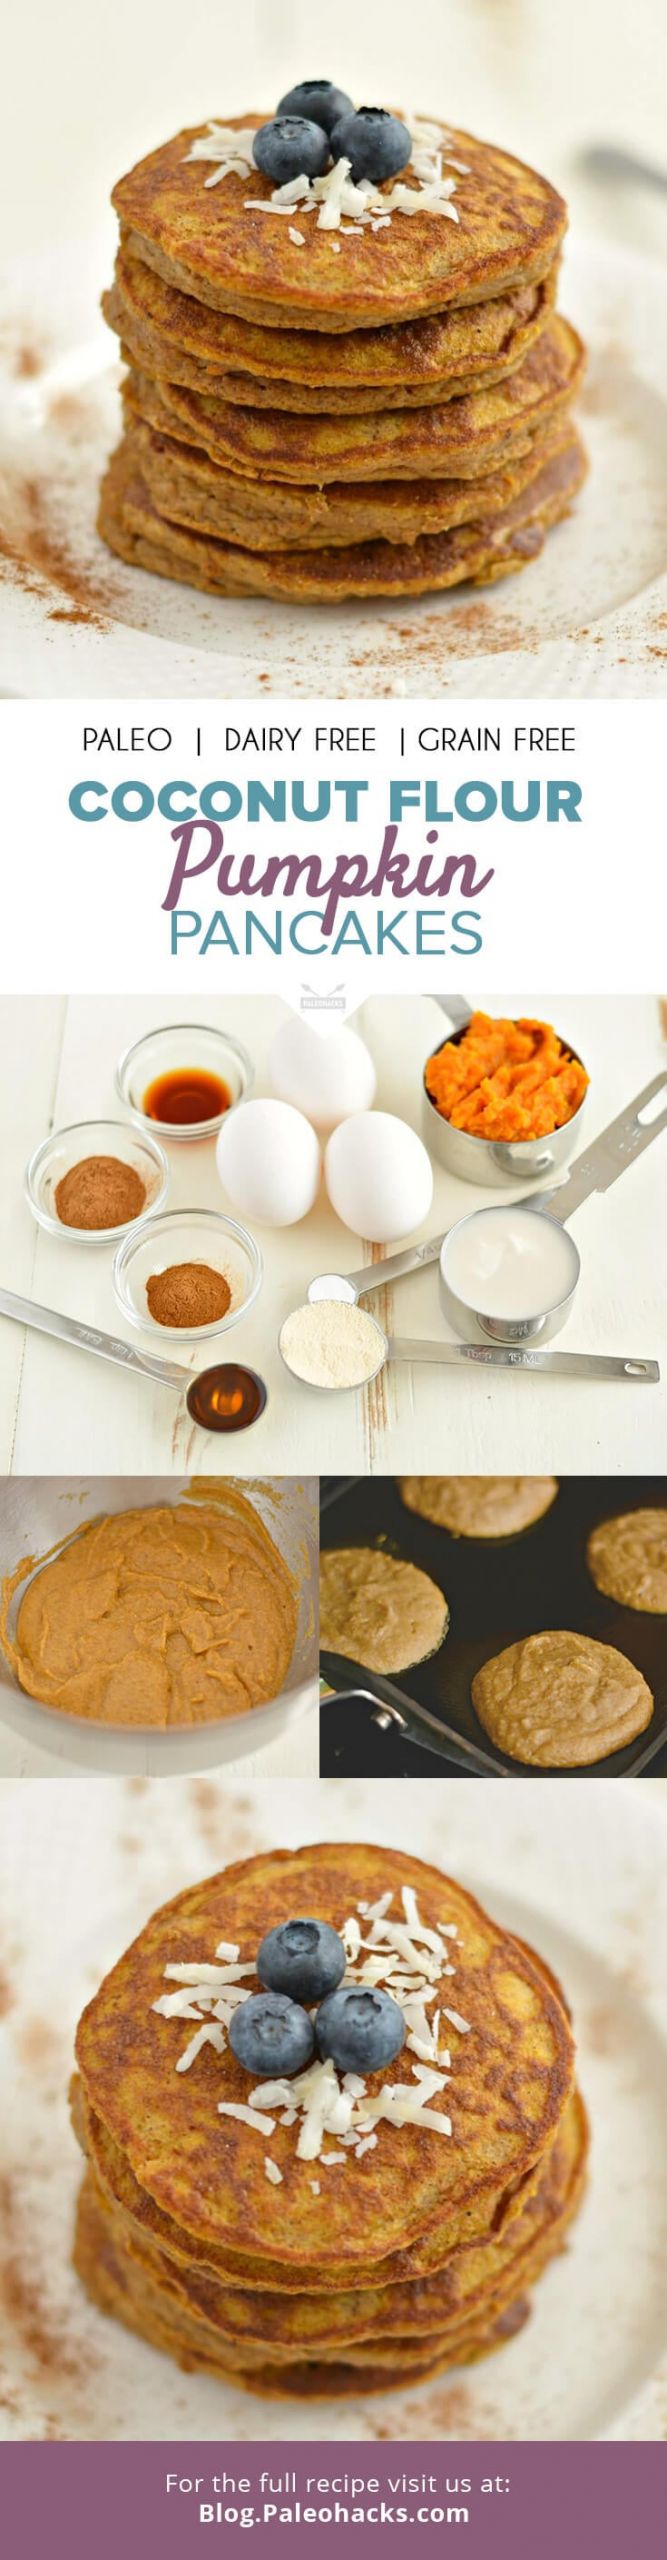 Paleohacks Coconut Pancakes
 Paleo Pumpkin Pancakes Recipe